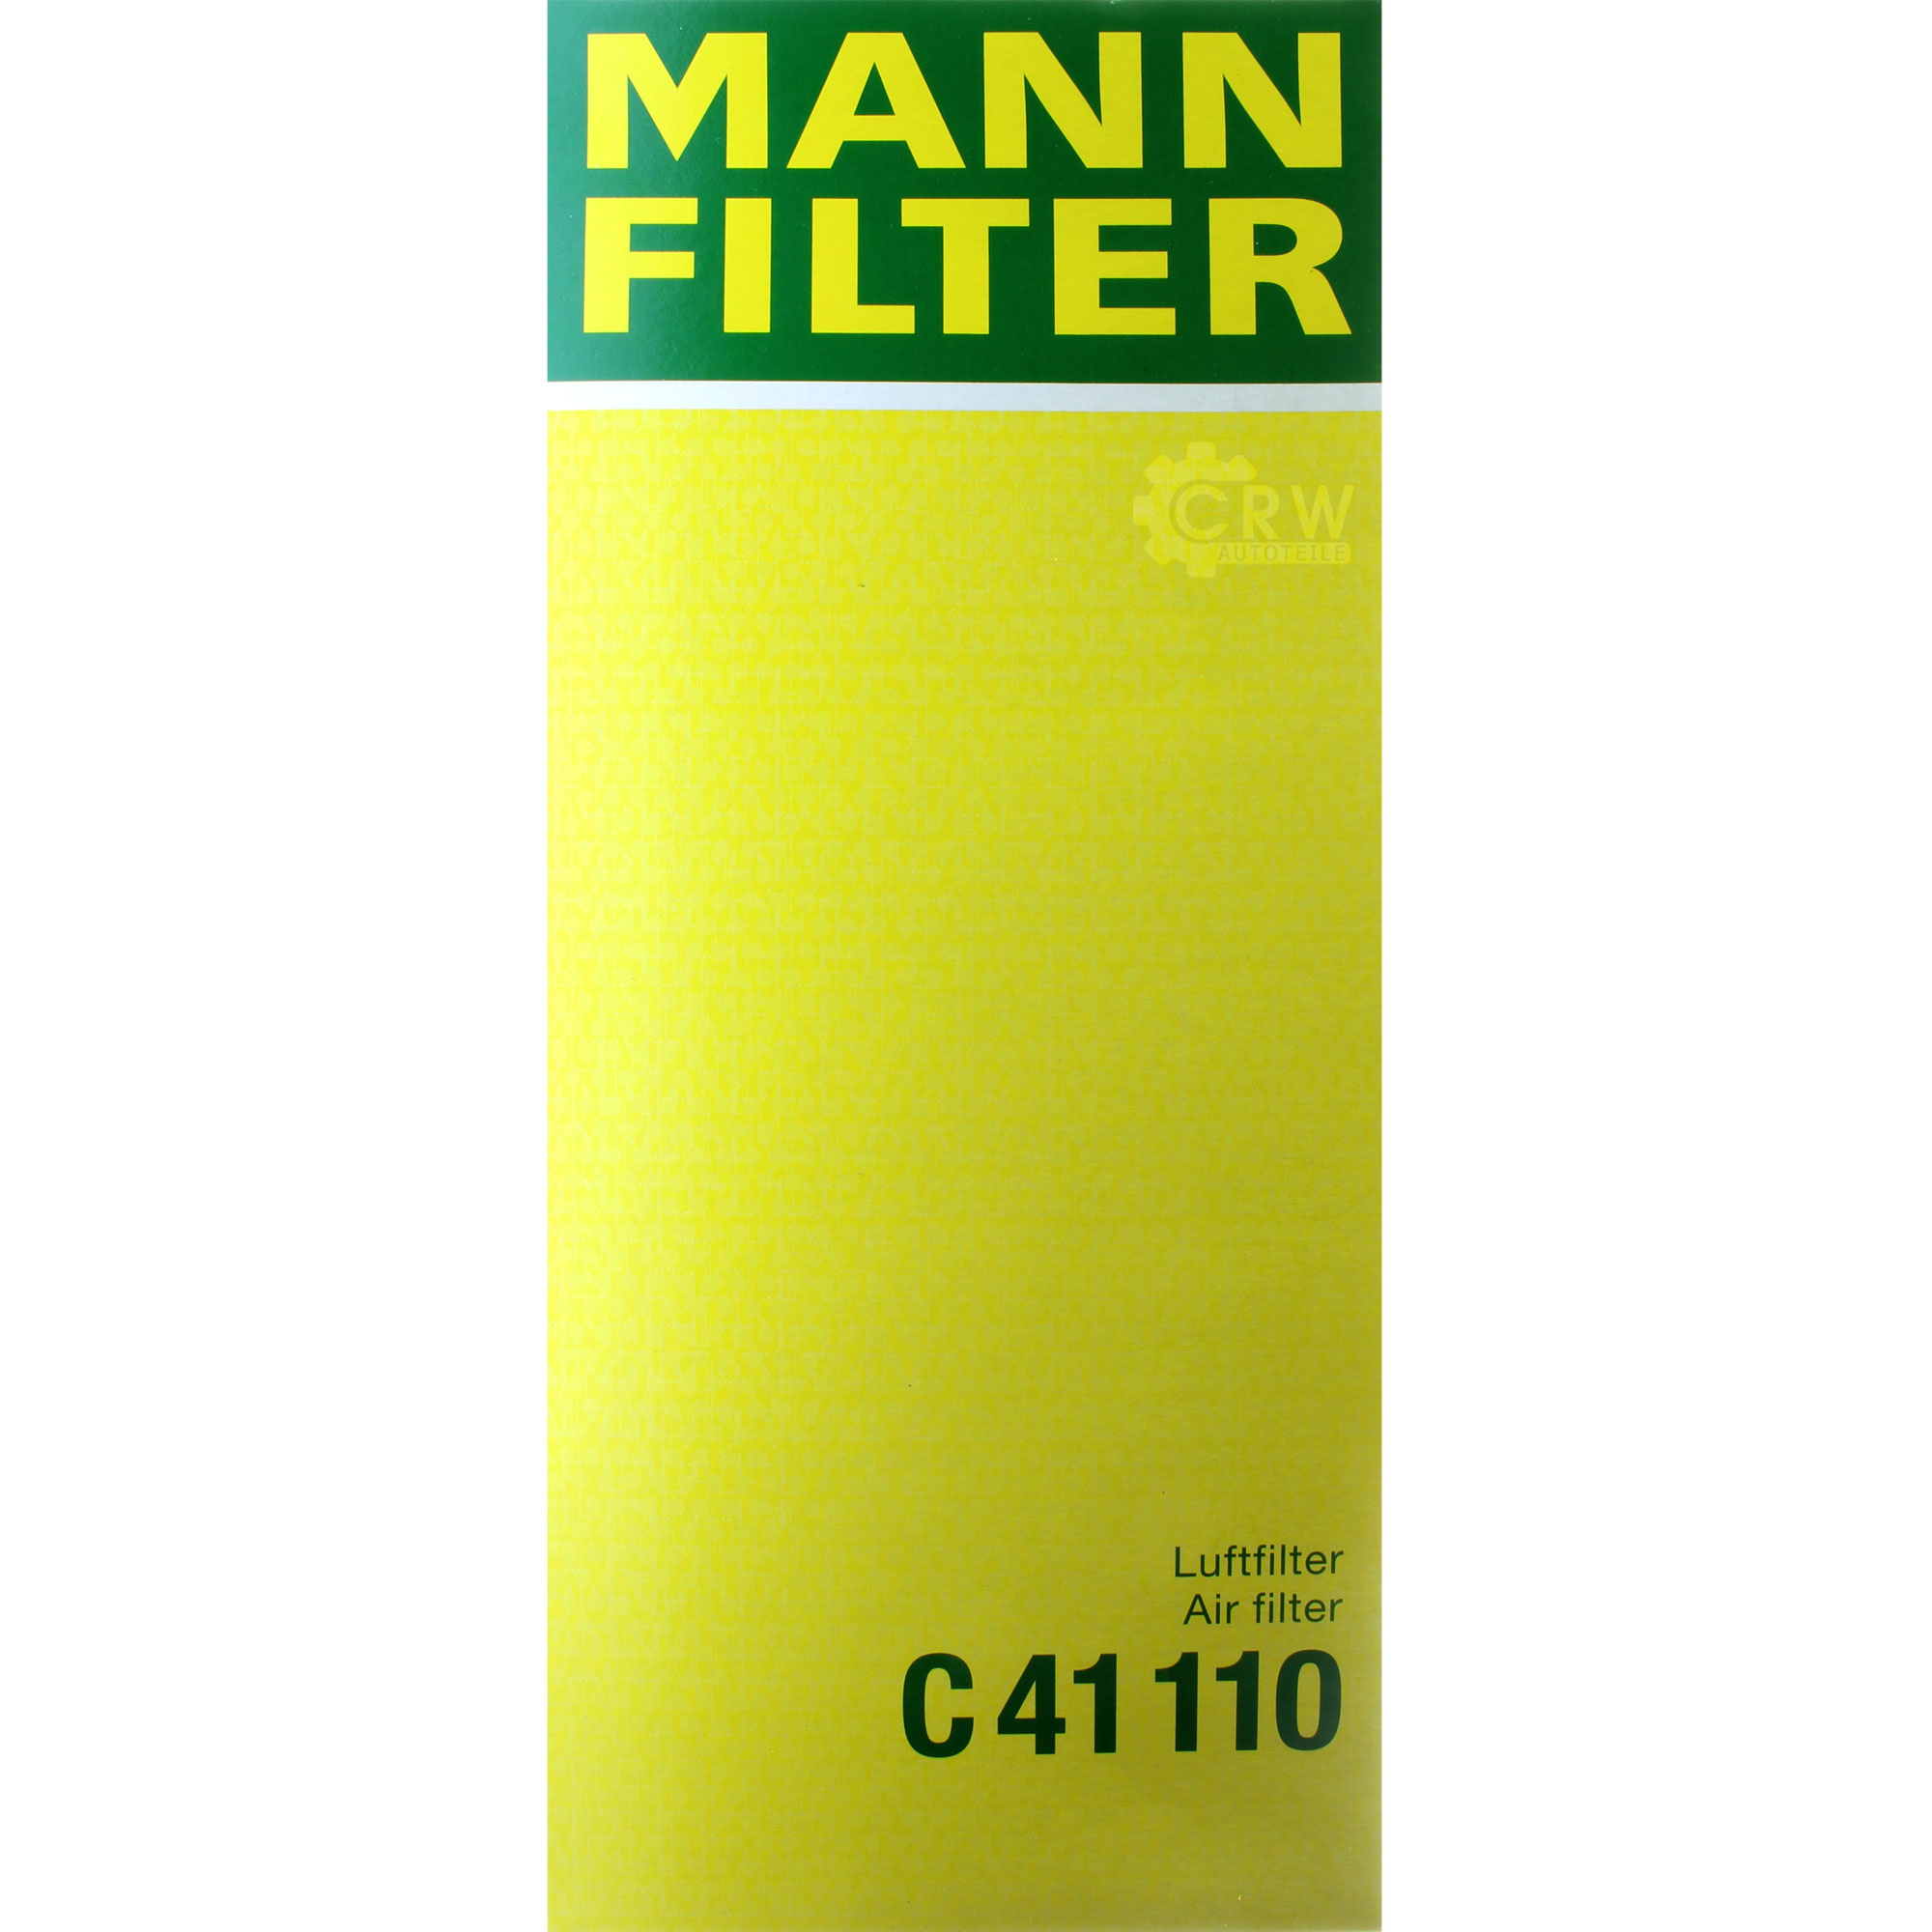 MANN-FILTER Luftfilter für VW Golf V 1K1 2.0 GTI EOS 1F7 1F8 3C5 Audi TT 8J3